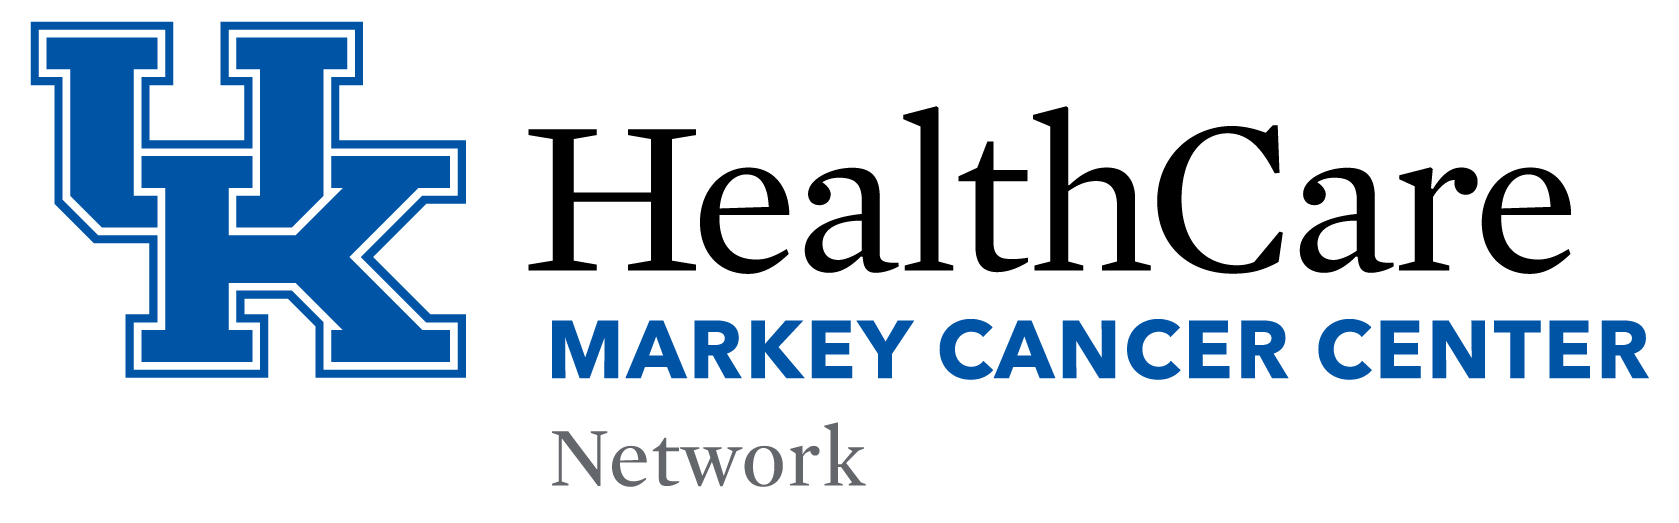 UK HealthCare Cancer Center Network logo